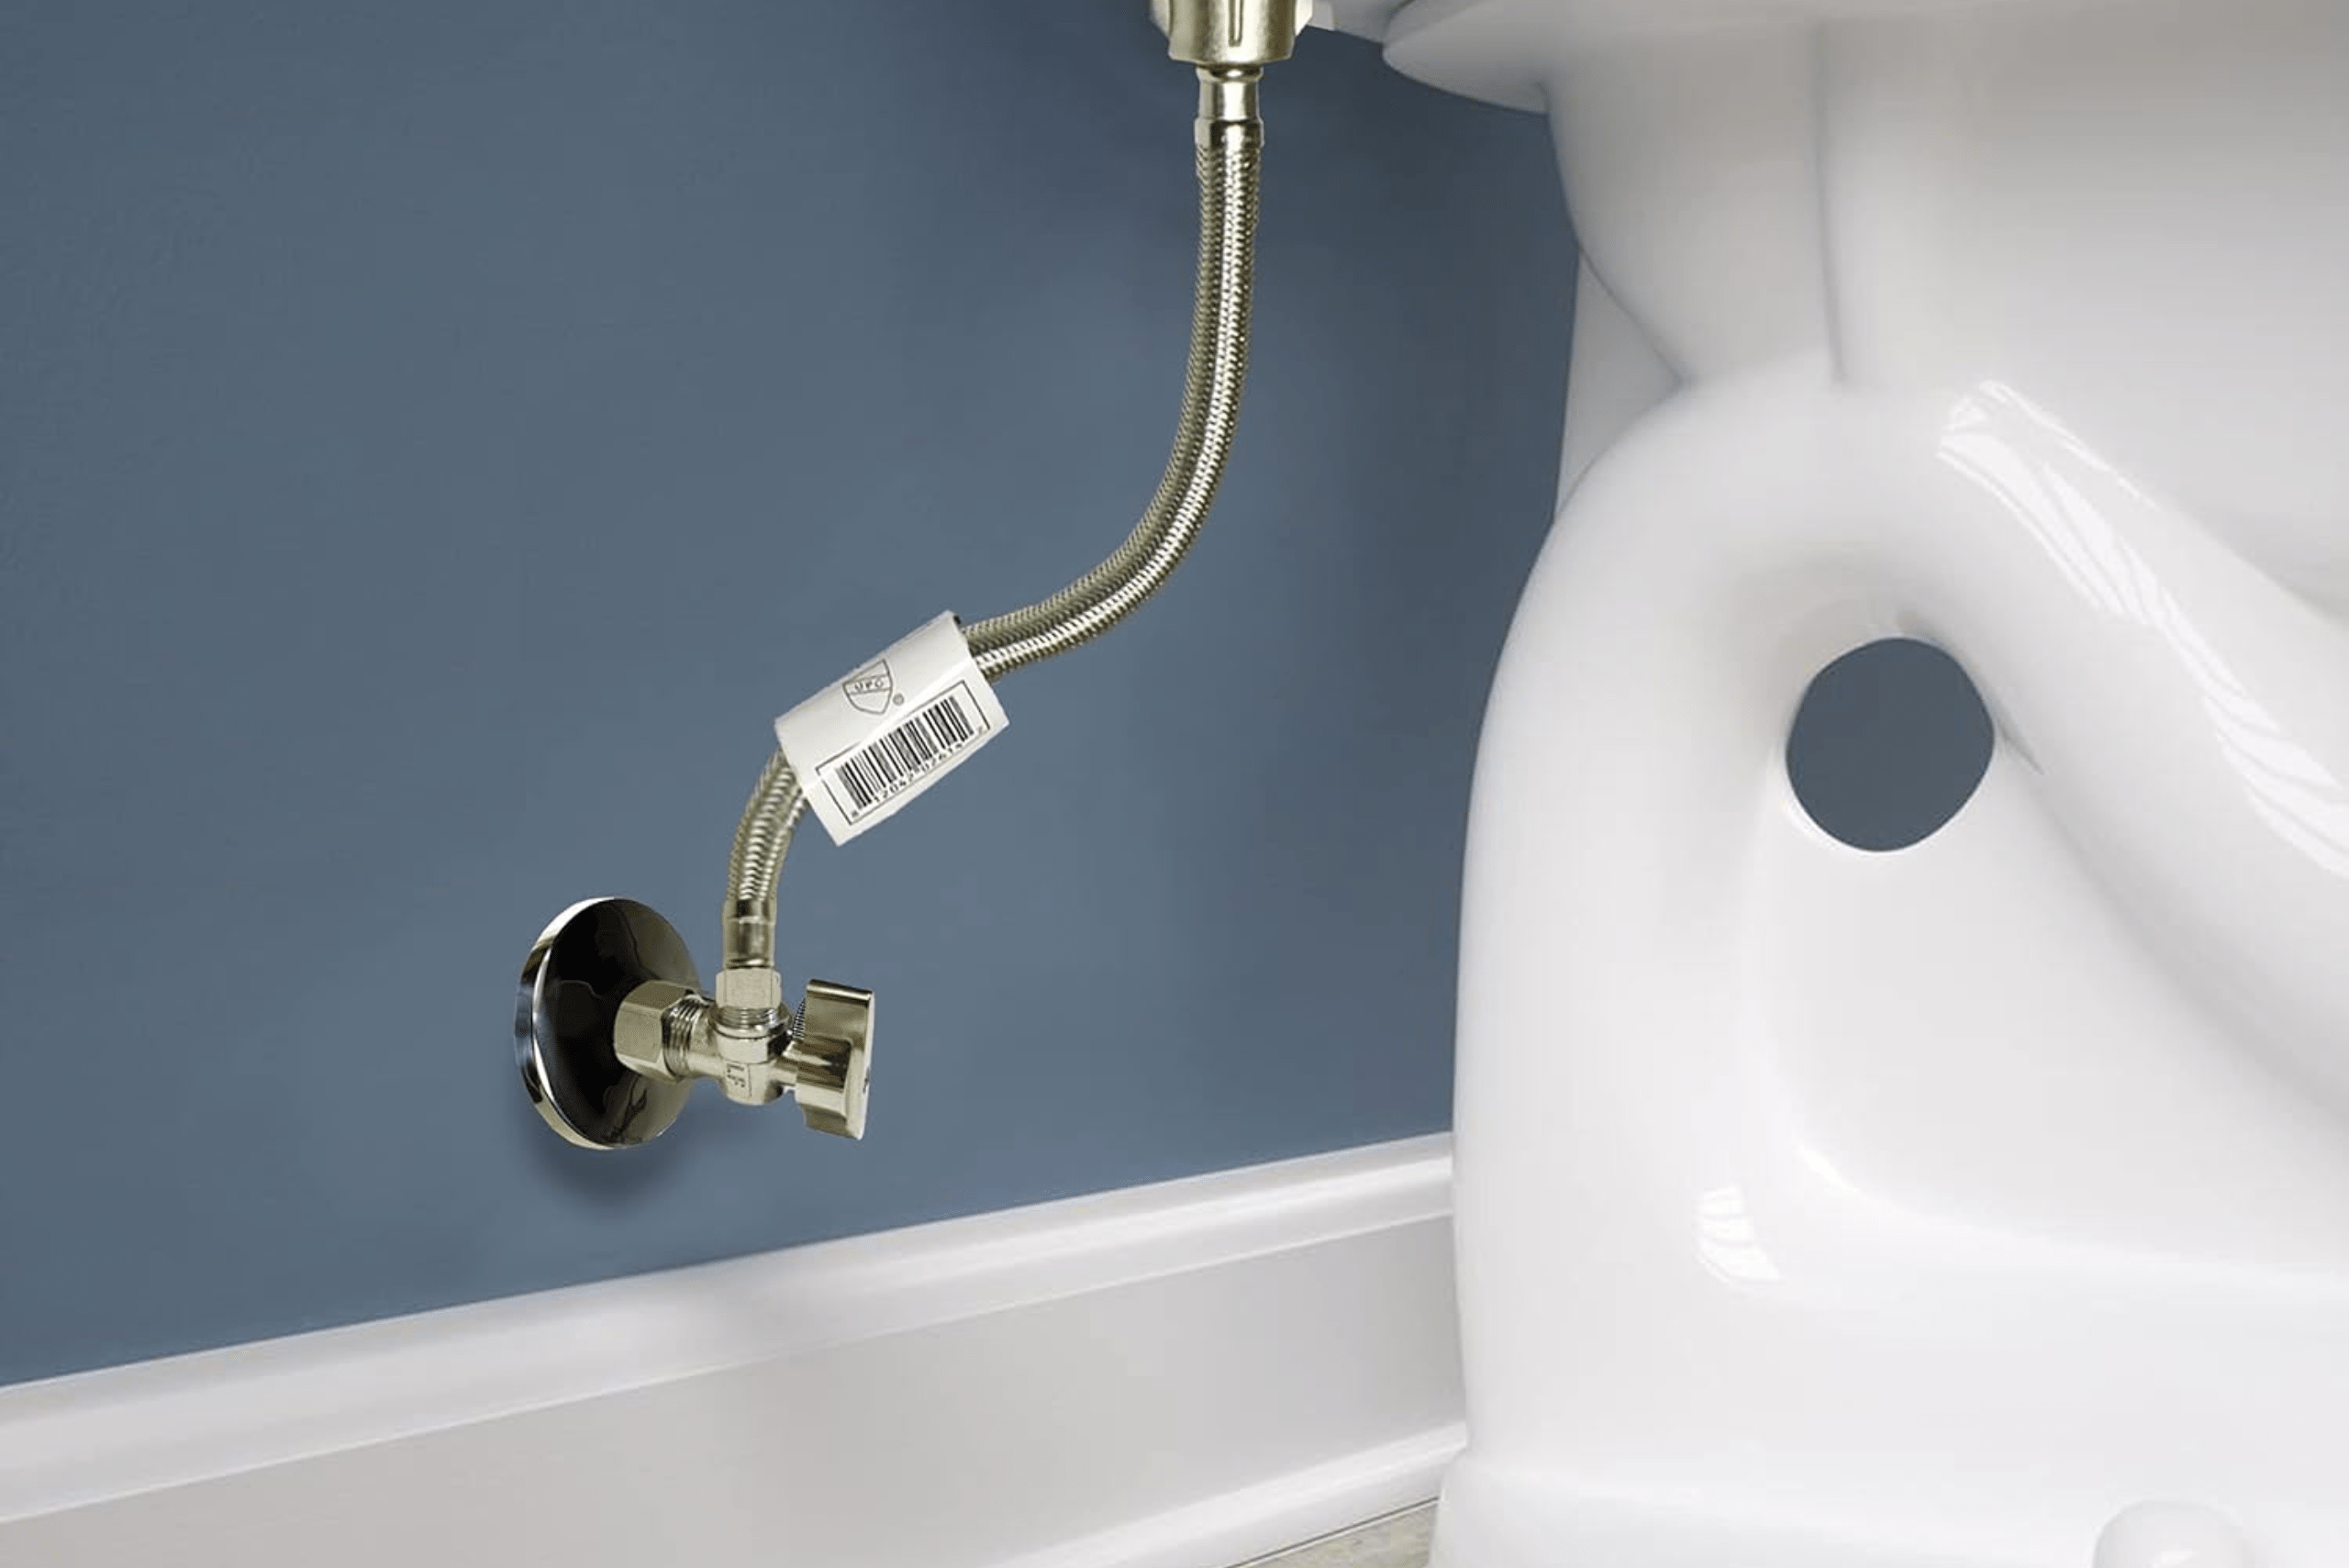 Toilet water shutoff valve.